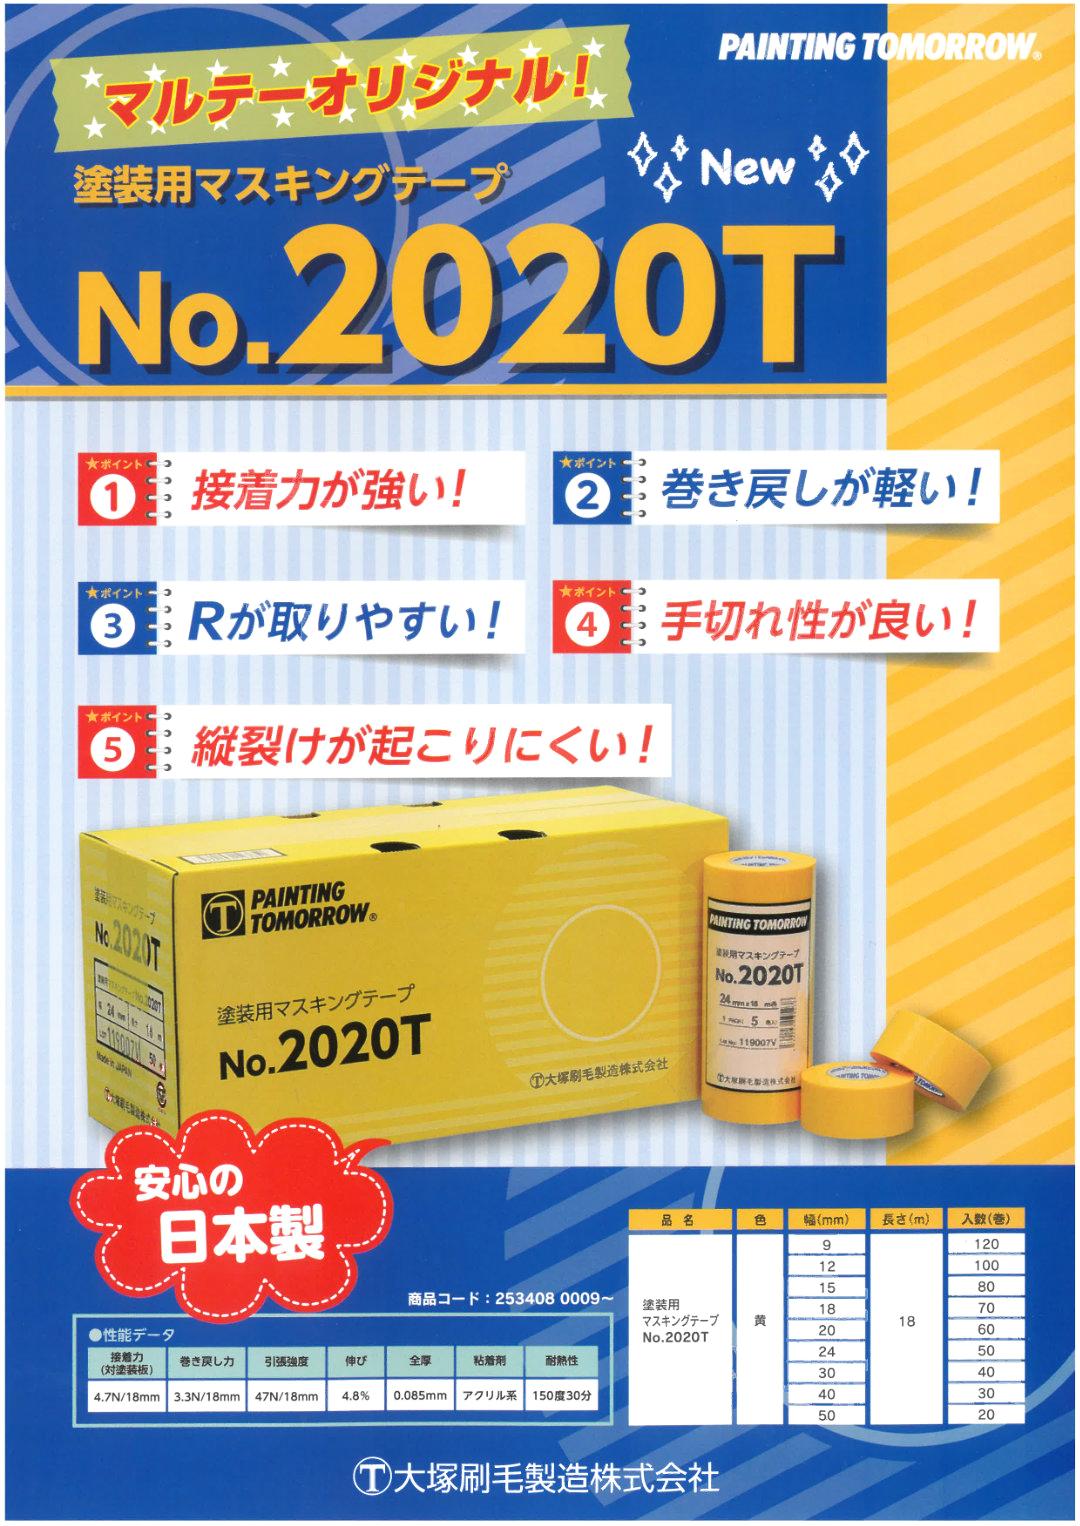 No.2020T 塗装用マスキングテープ 黄 | akiba paint web 本店